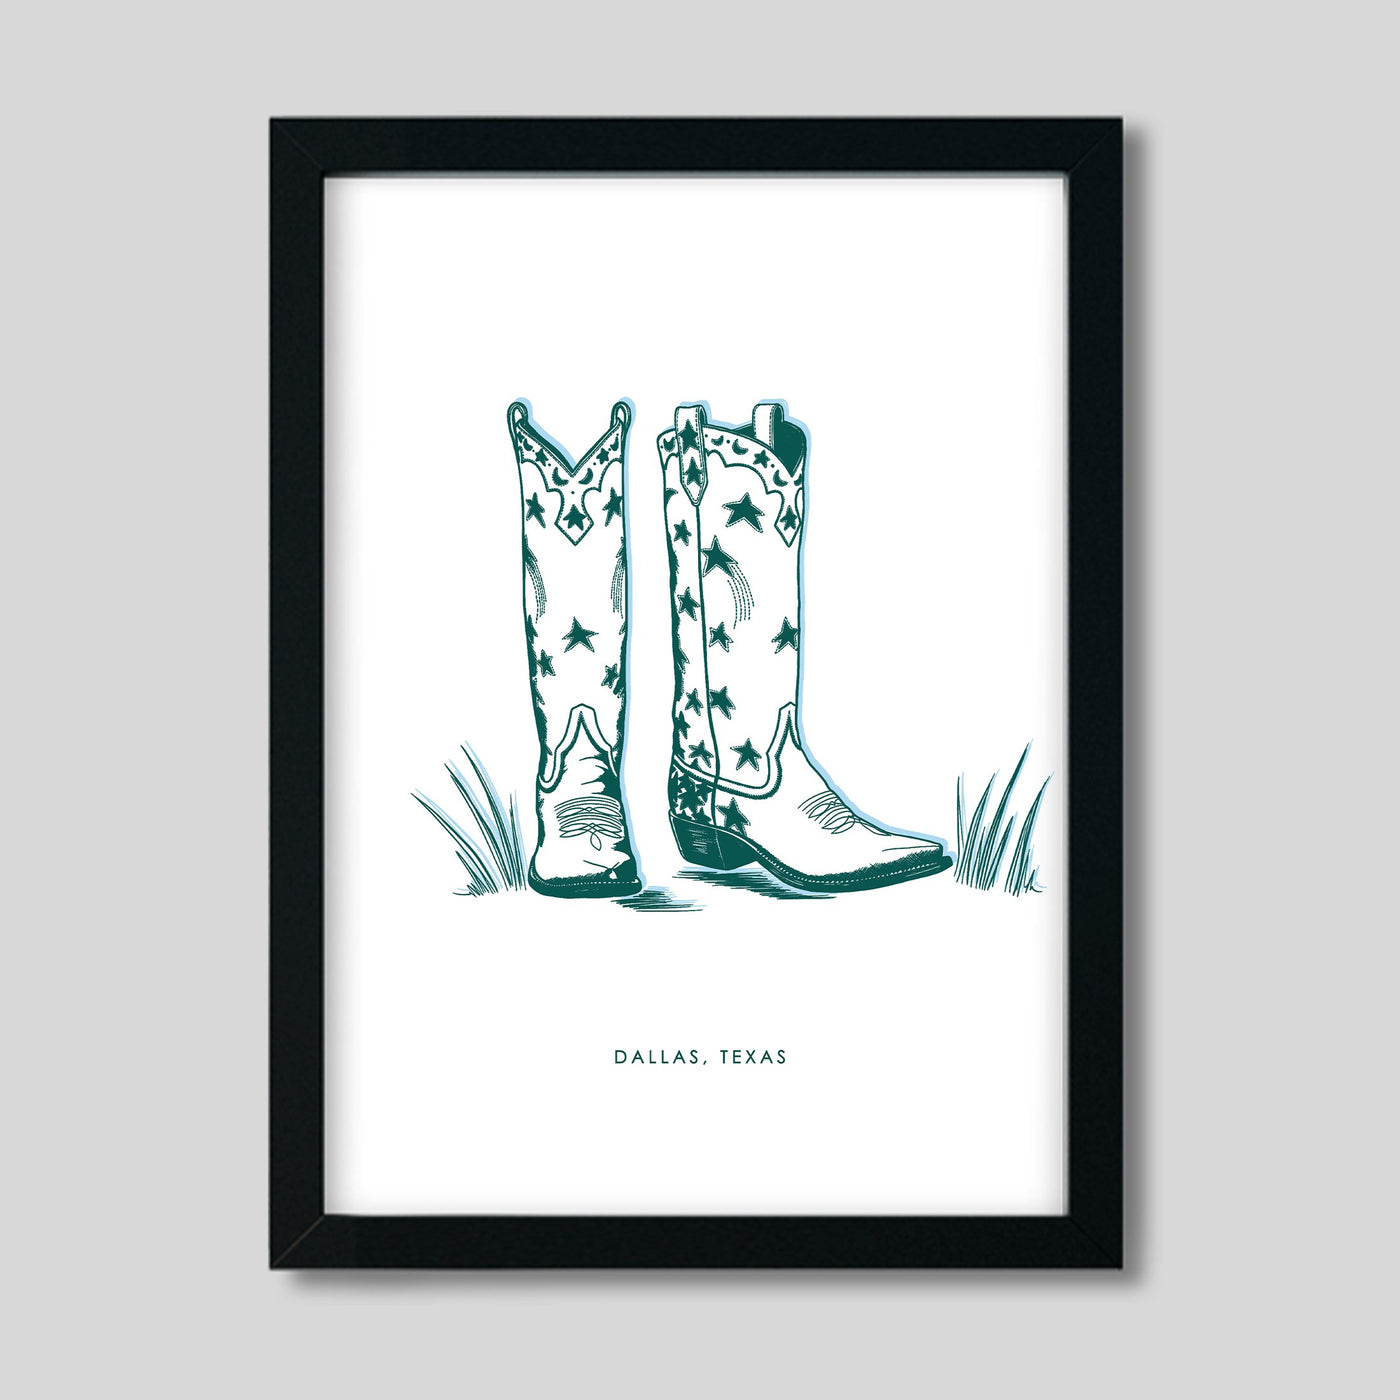 Gallery Prints White / 8x10 / black frame Dallas Boots Gallery Print Katie Kime